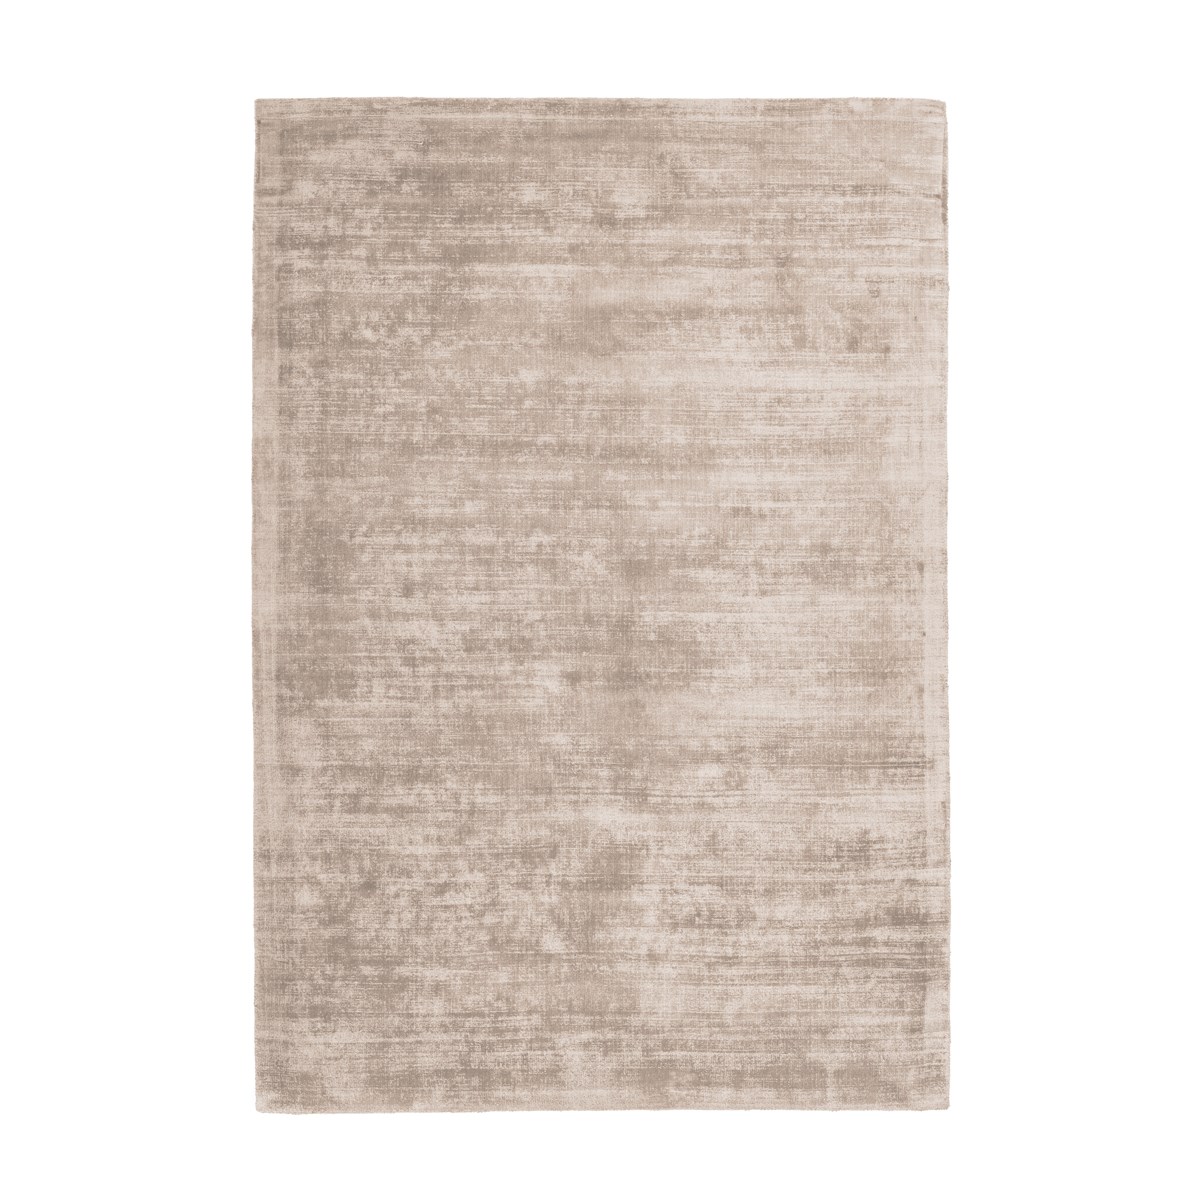 Tapis moderne en Soie Beige clair 120x170 cm